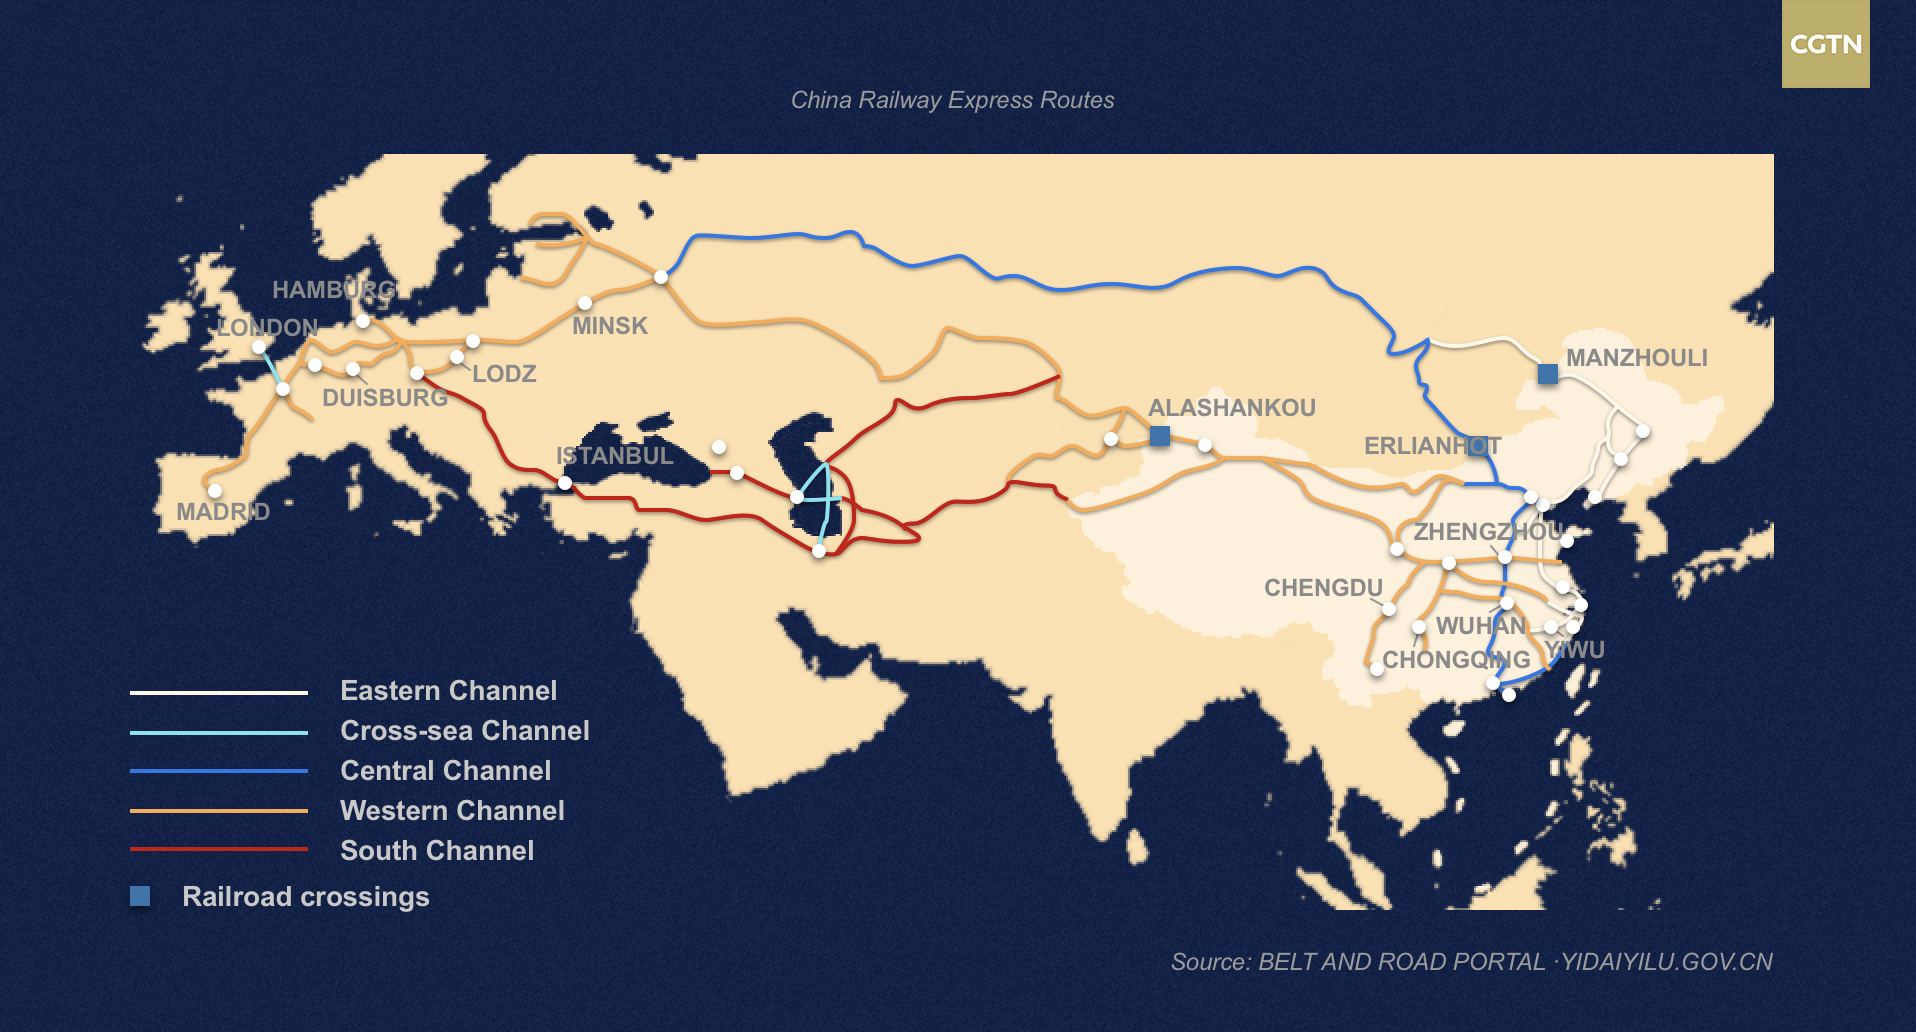 Data Tells Trips On China Railway Express Surge Since 2011 Cgtn